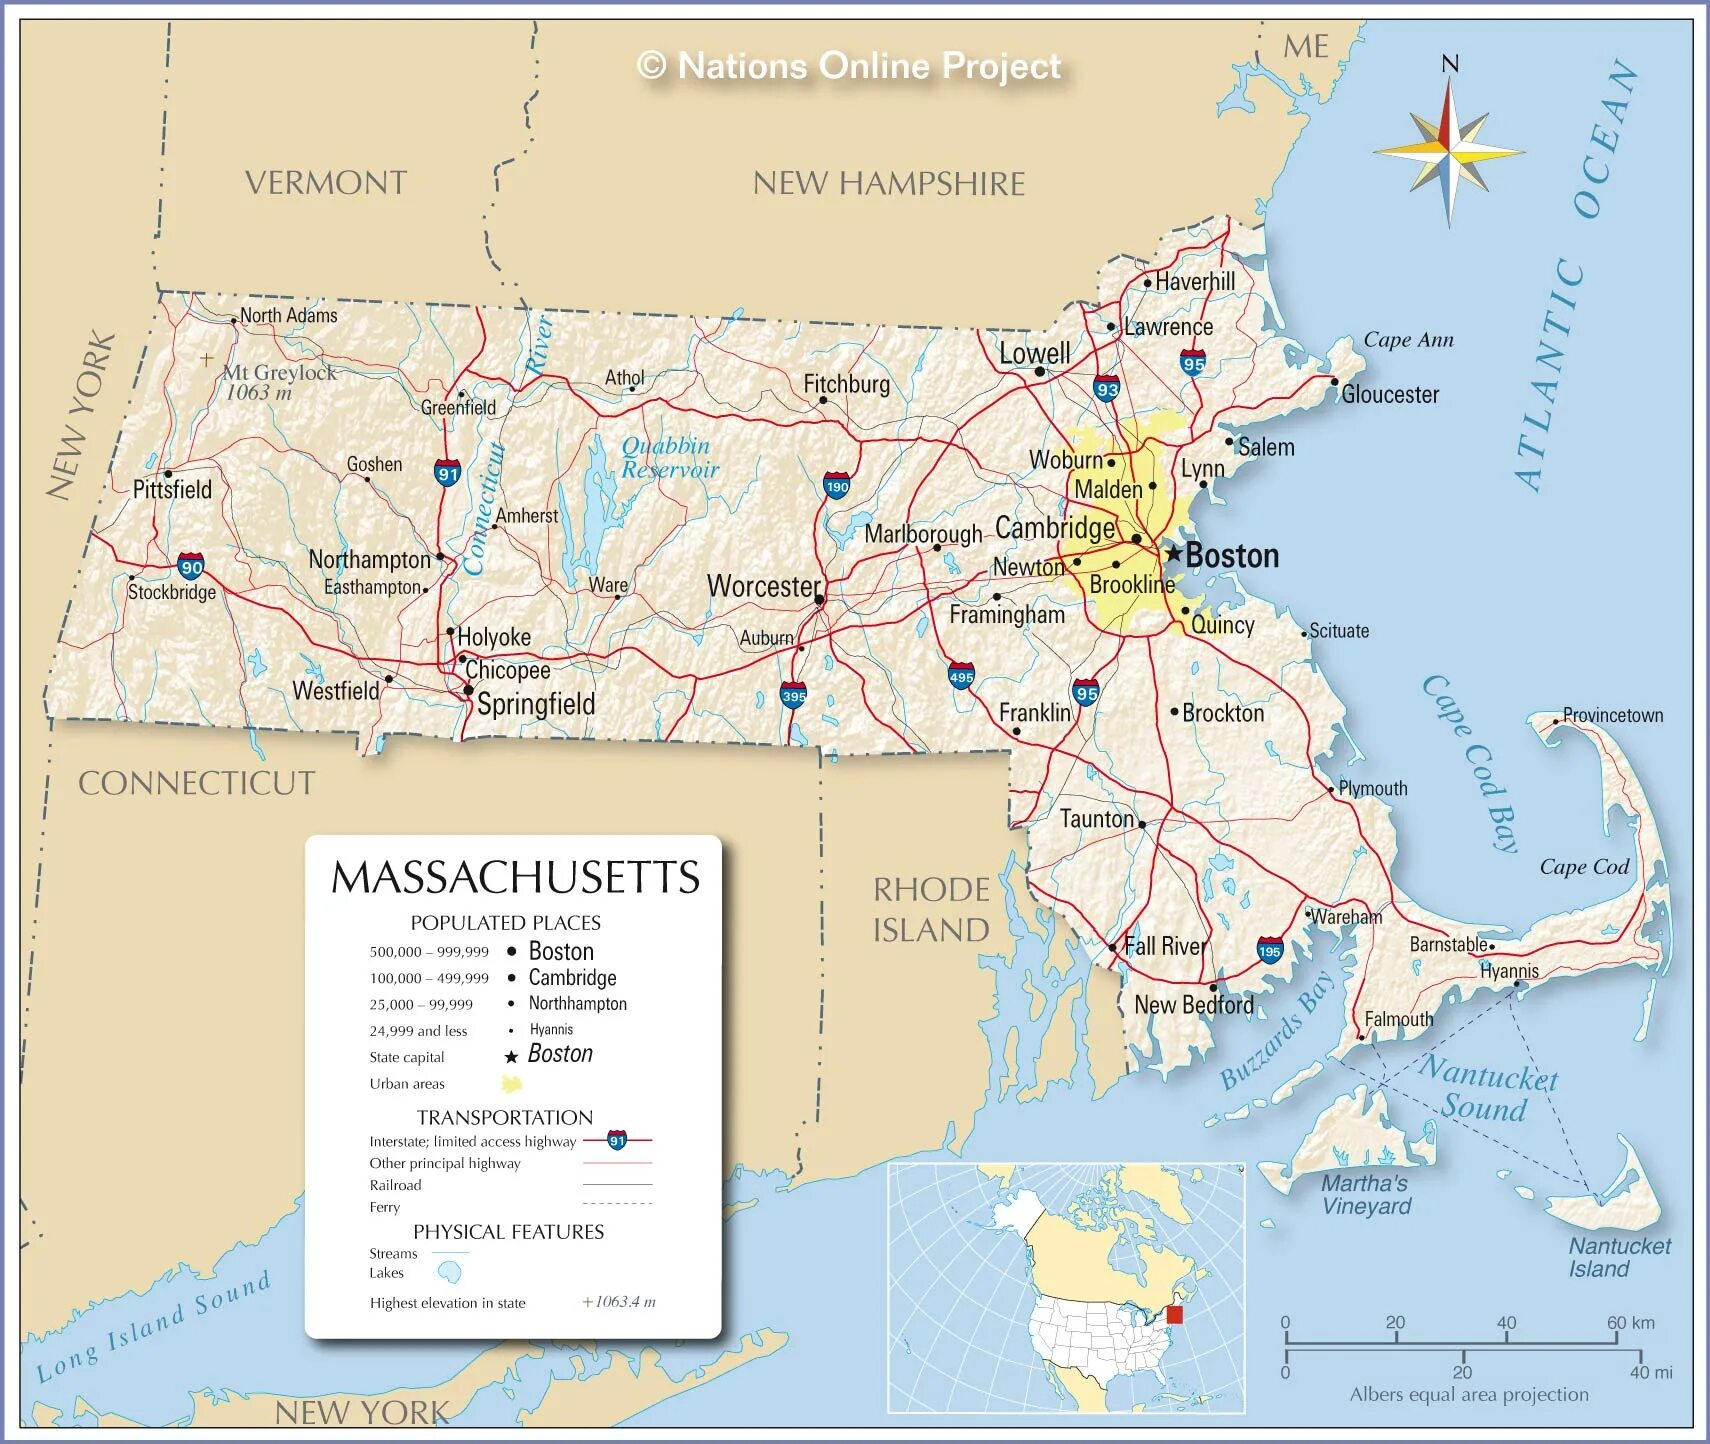 Бостон Массачусетс на карте США. Бостон США на карте и штат. Бостон штат Массачусетс на карте. Бостон штат Массачусетс на карте США.